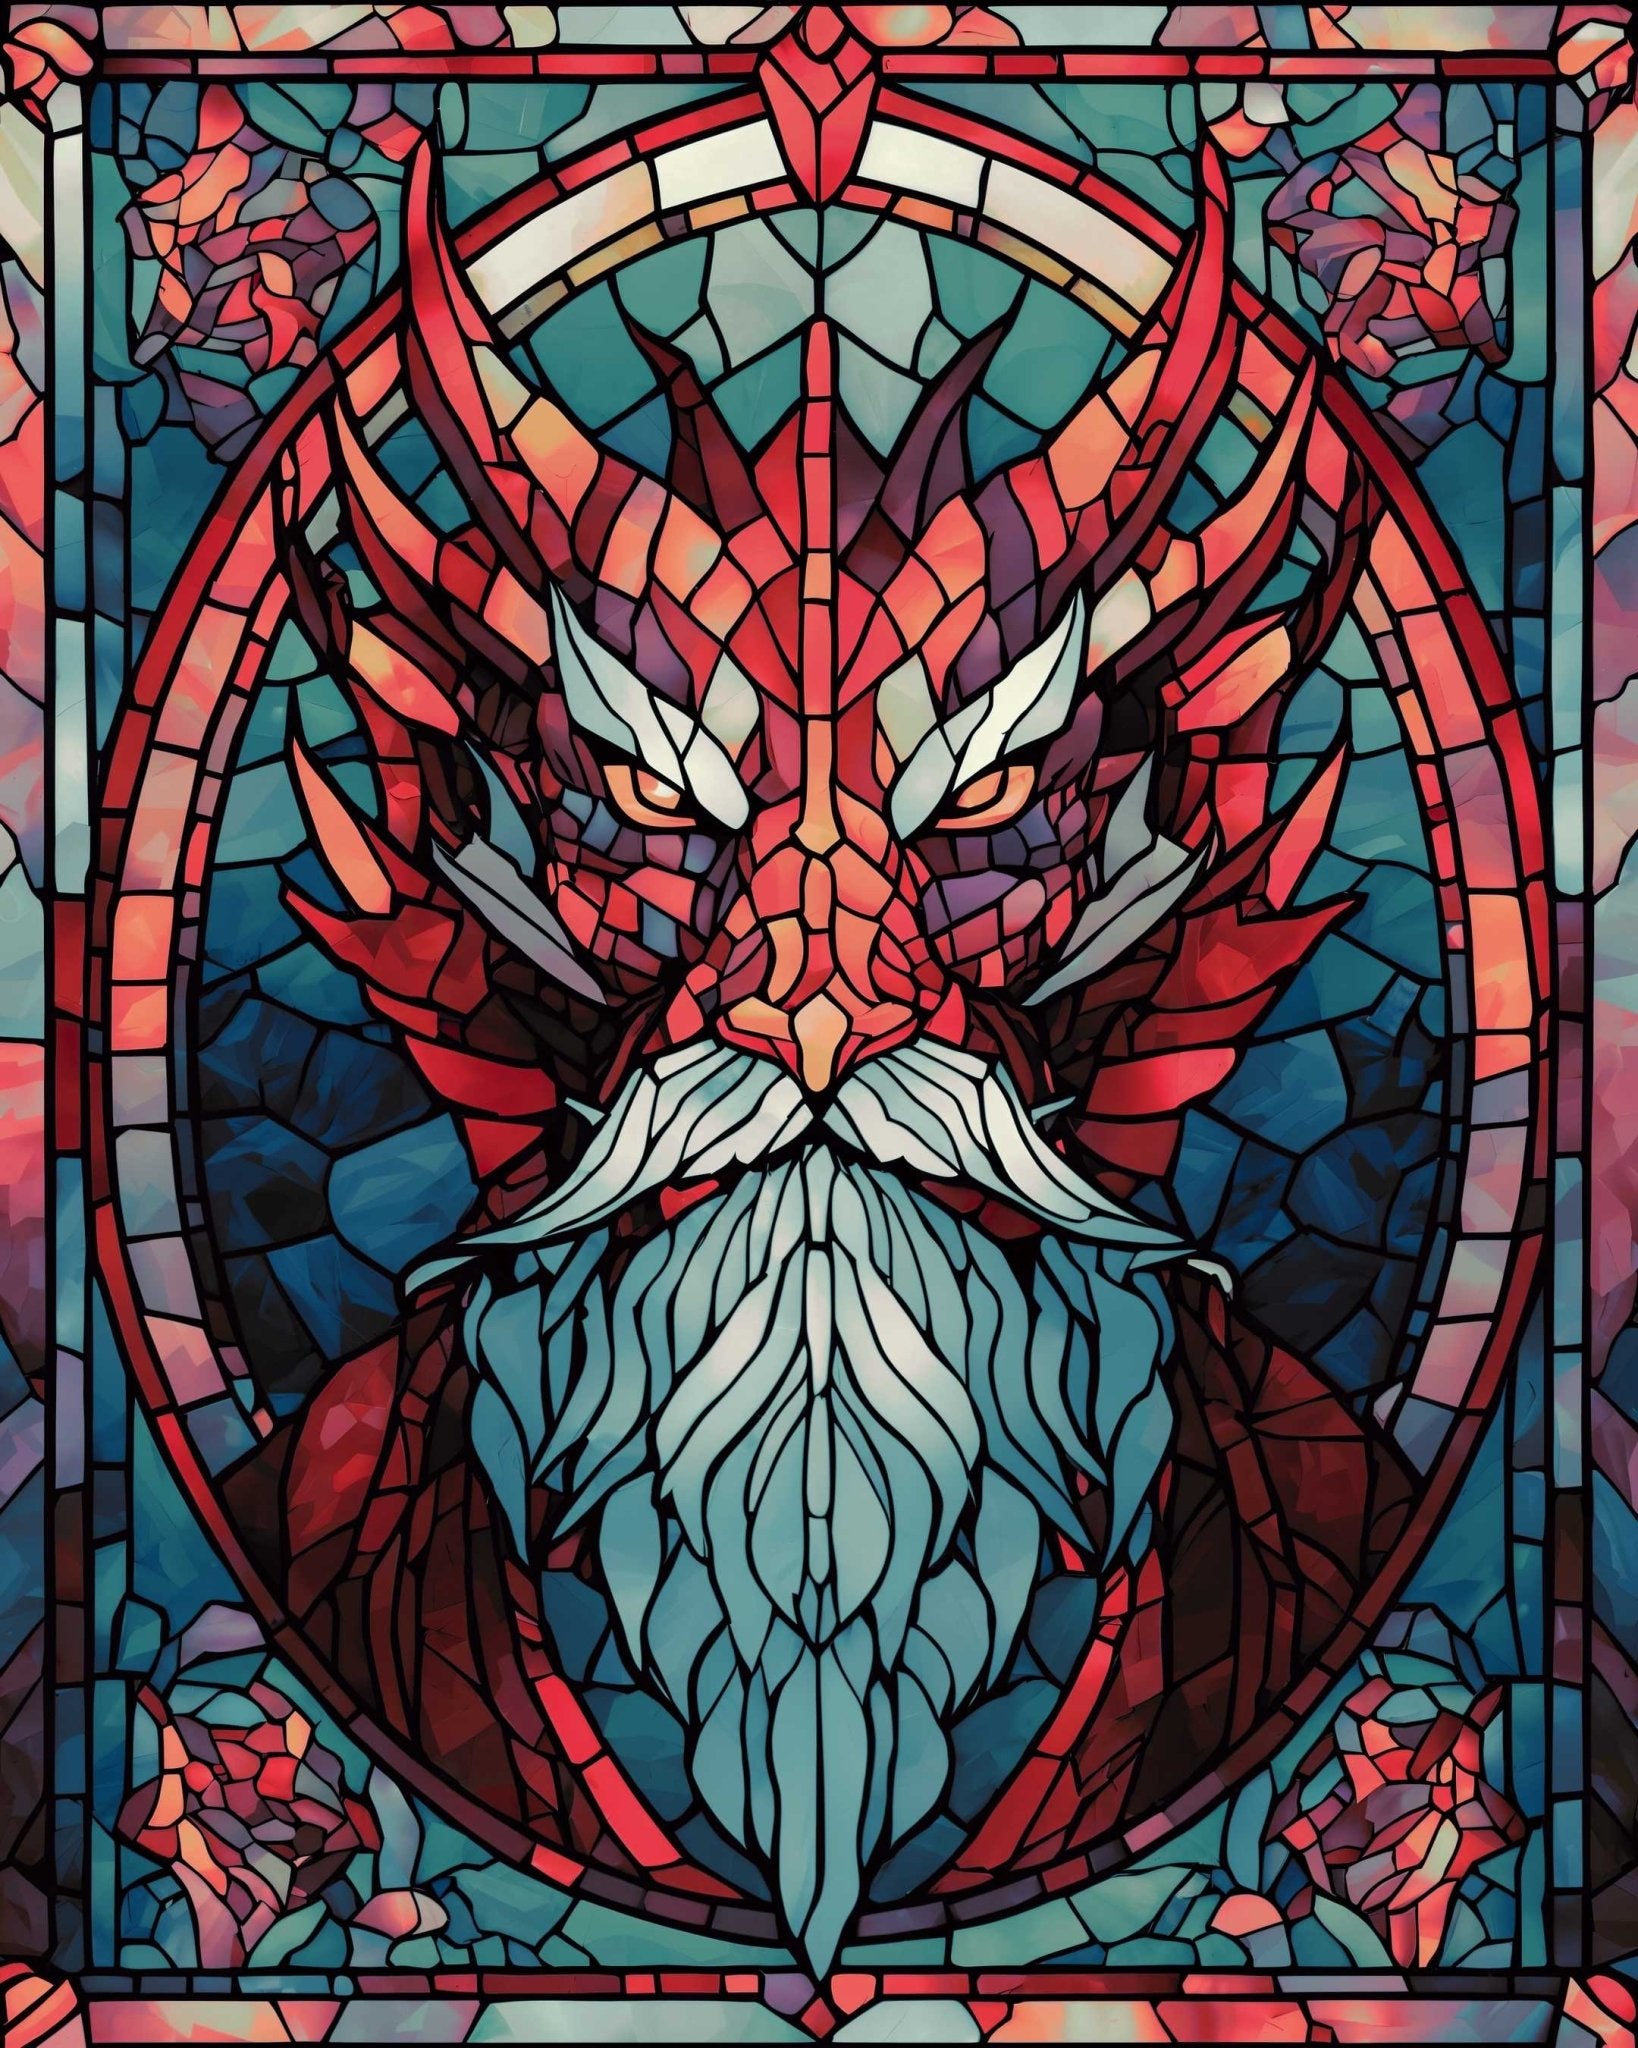 Copper dragon elder - Poster - Ever colorful